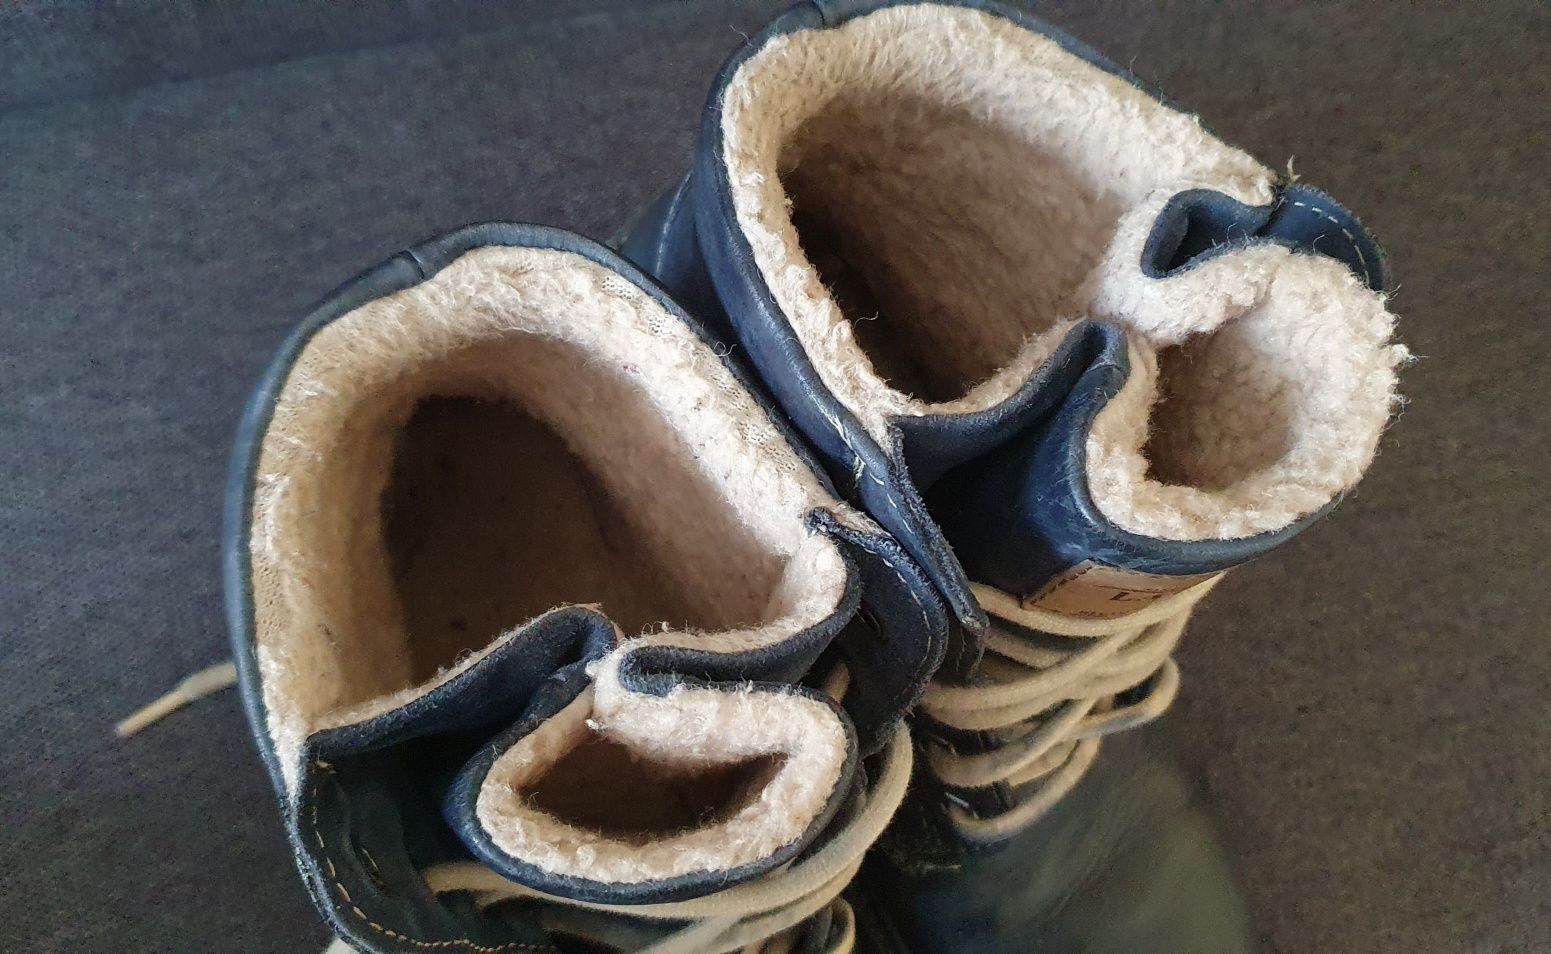 Trapery skórzane 35 Lasocki buty zimowe